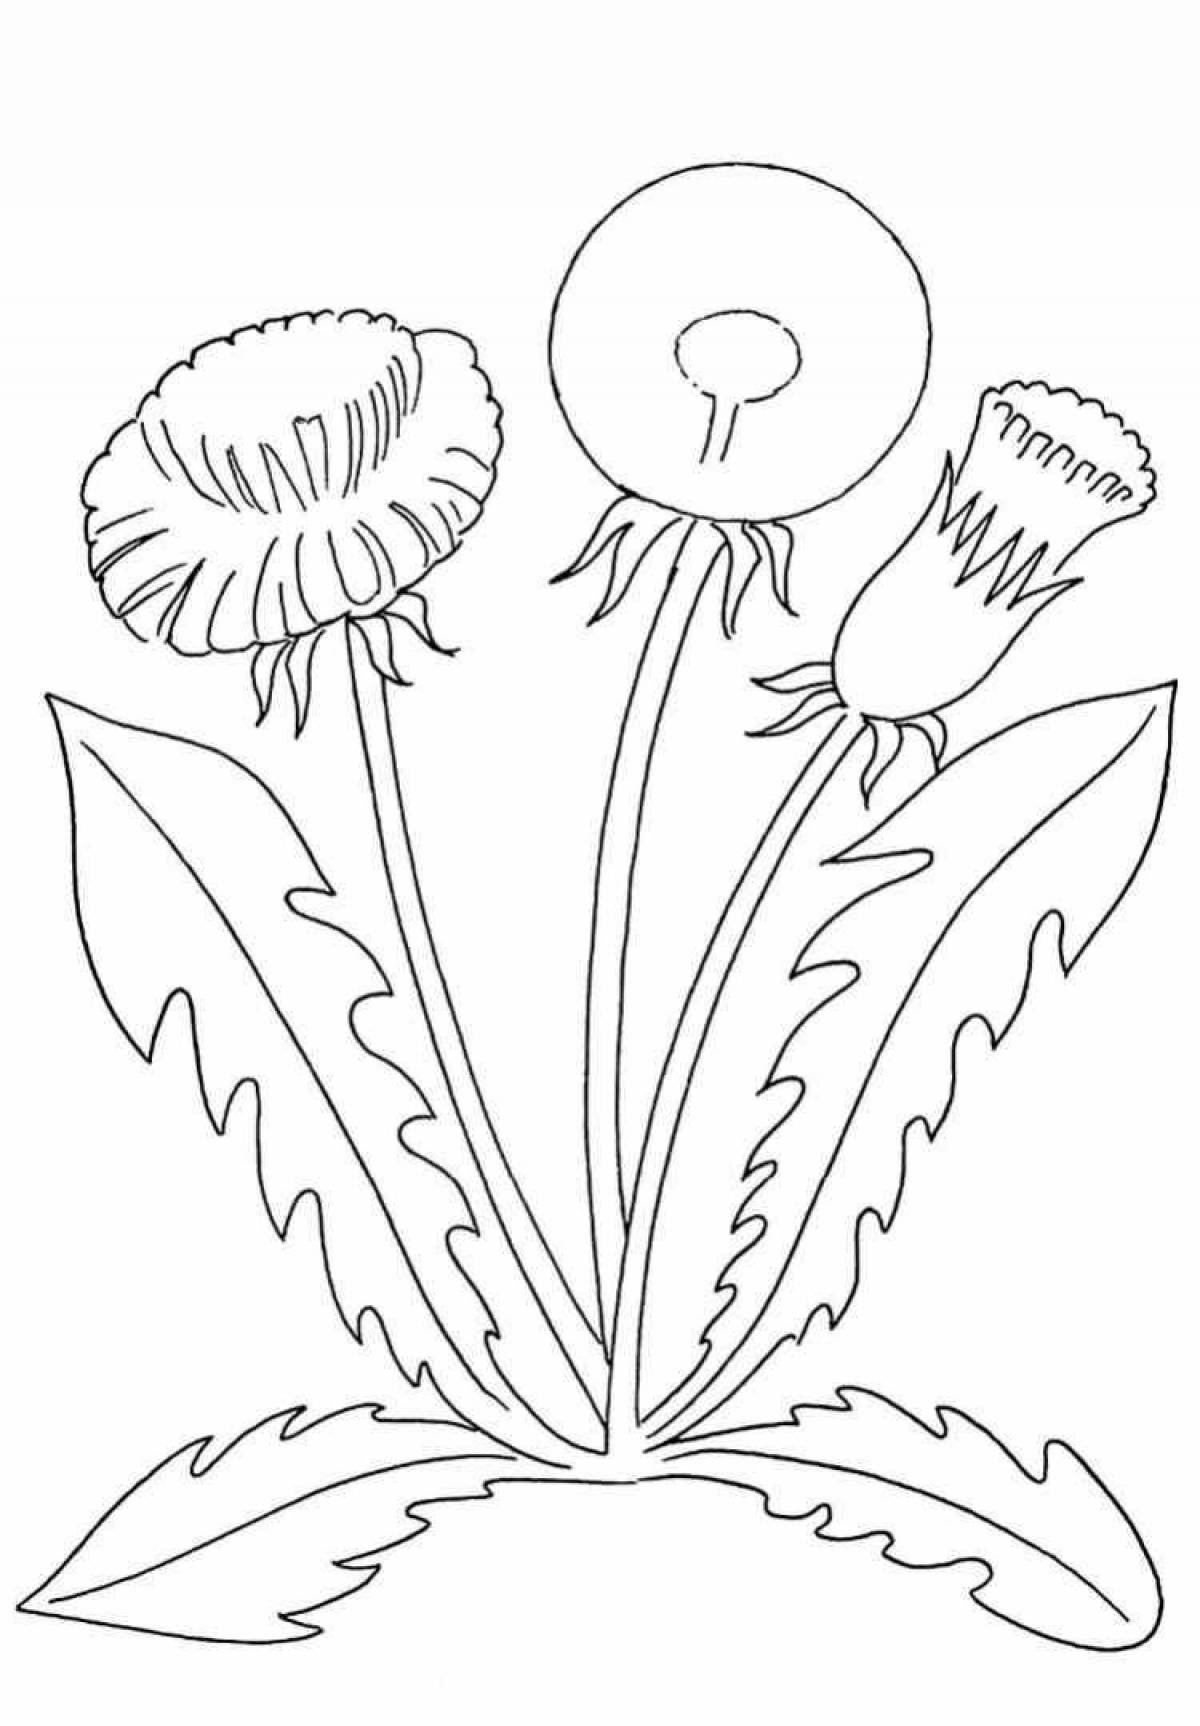 Cute dandelion coloring book for kids